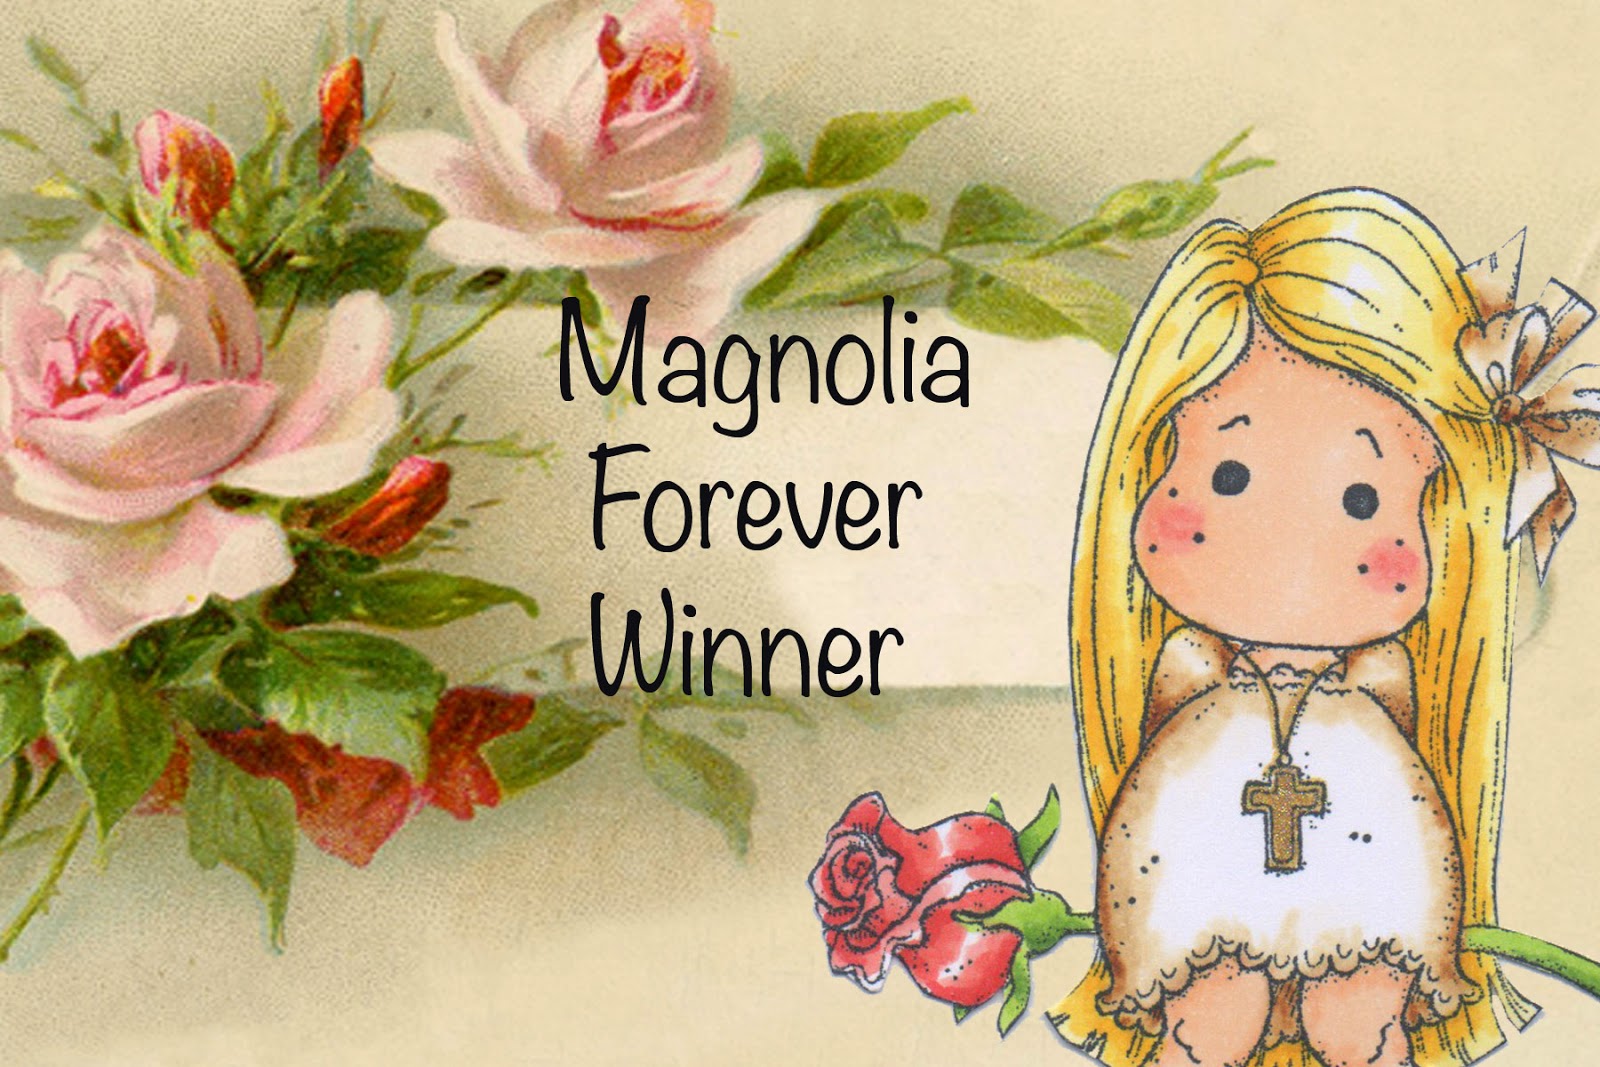 Magnolia Forever #22 no pink